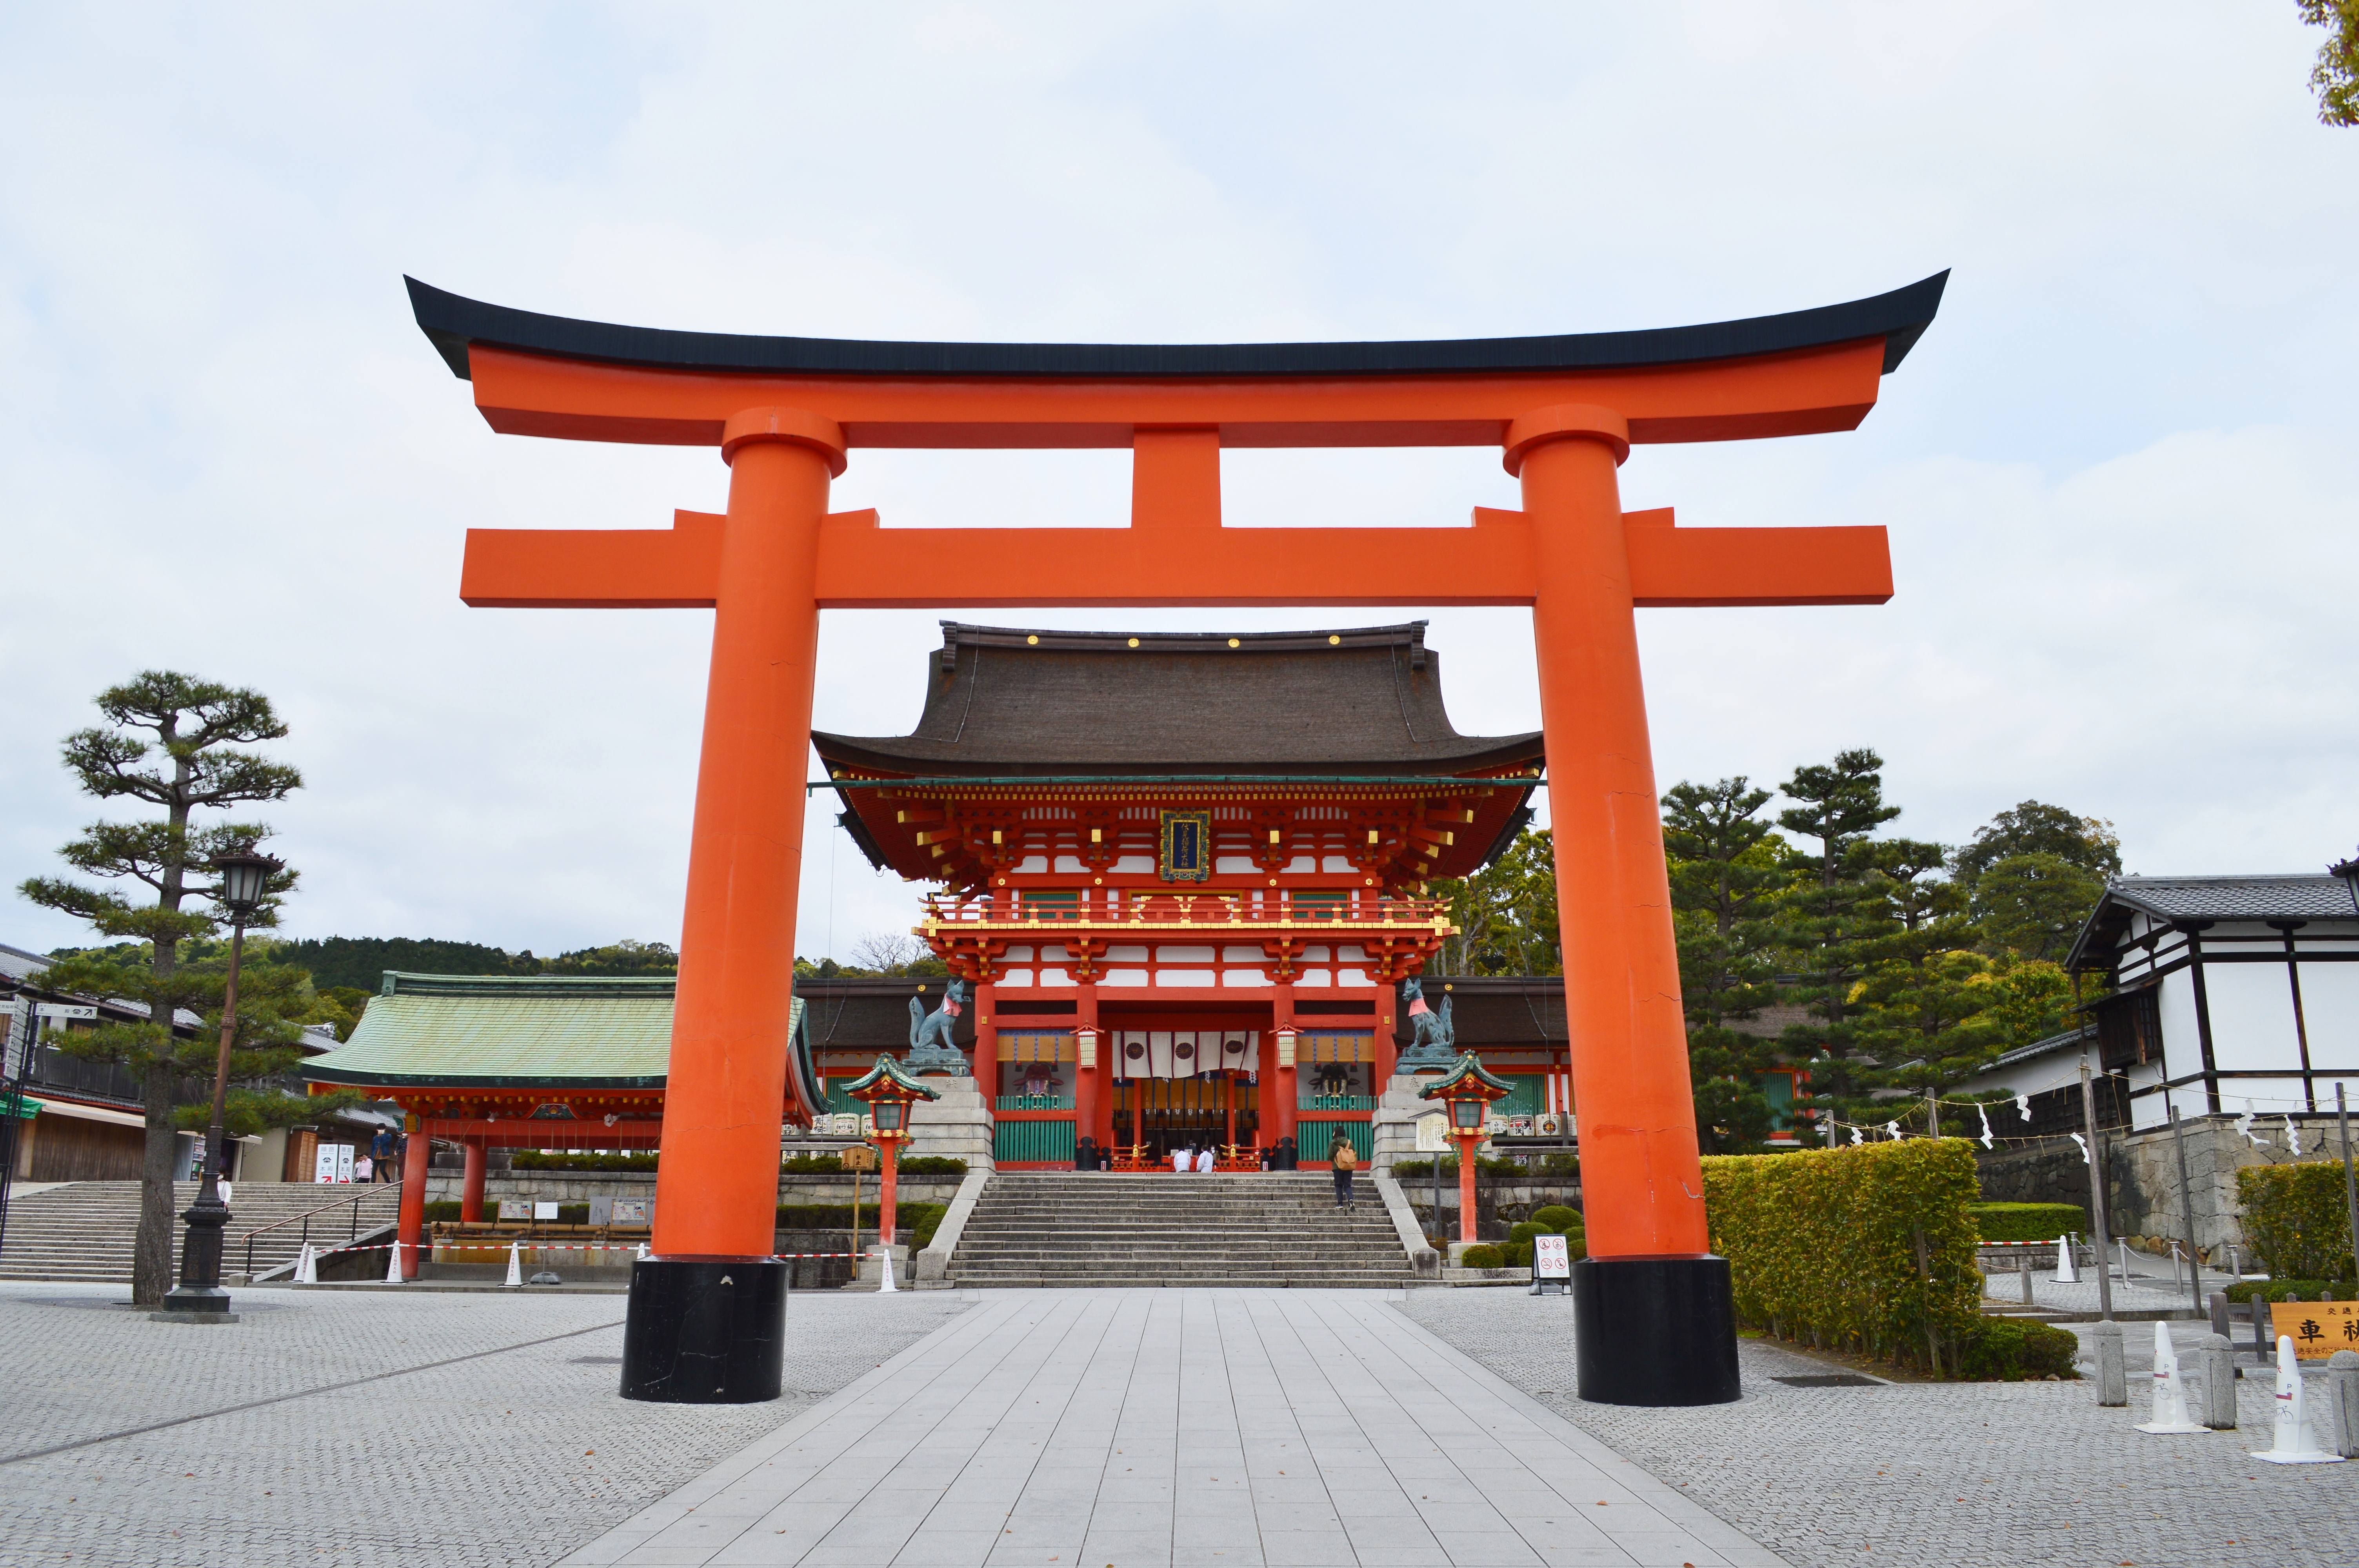 稲荷神社 - Wikipedia